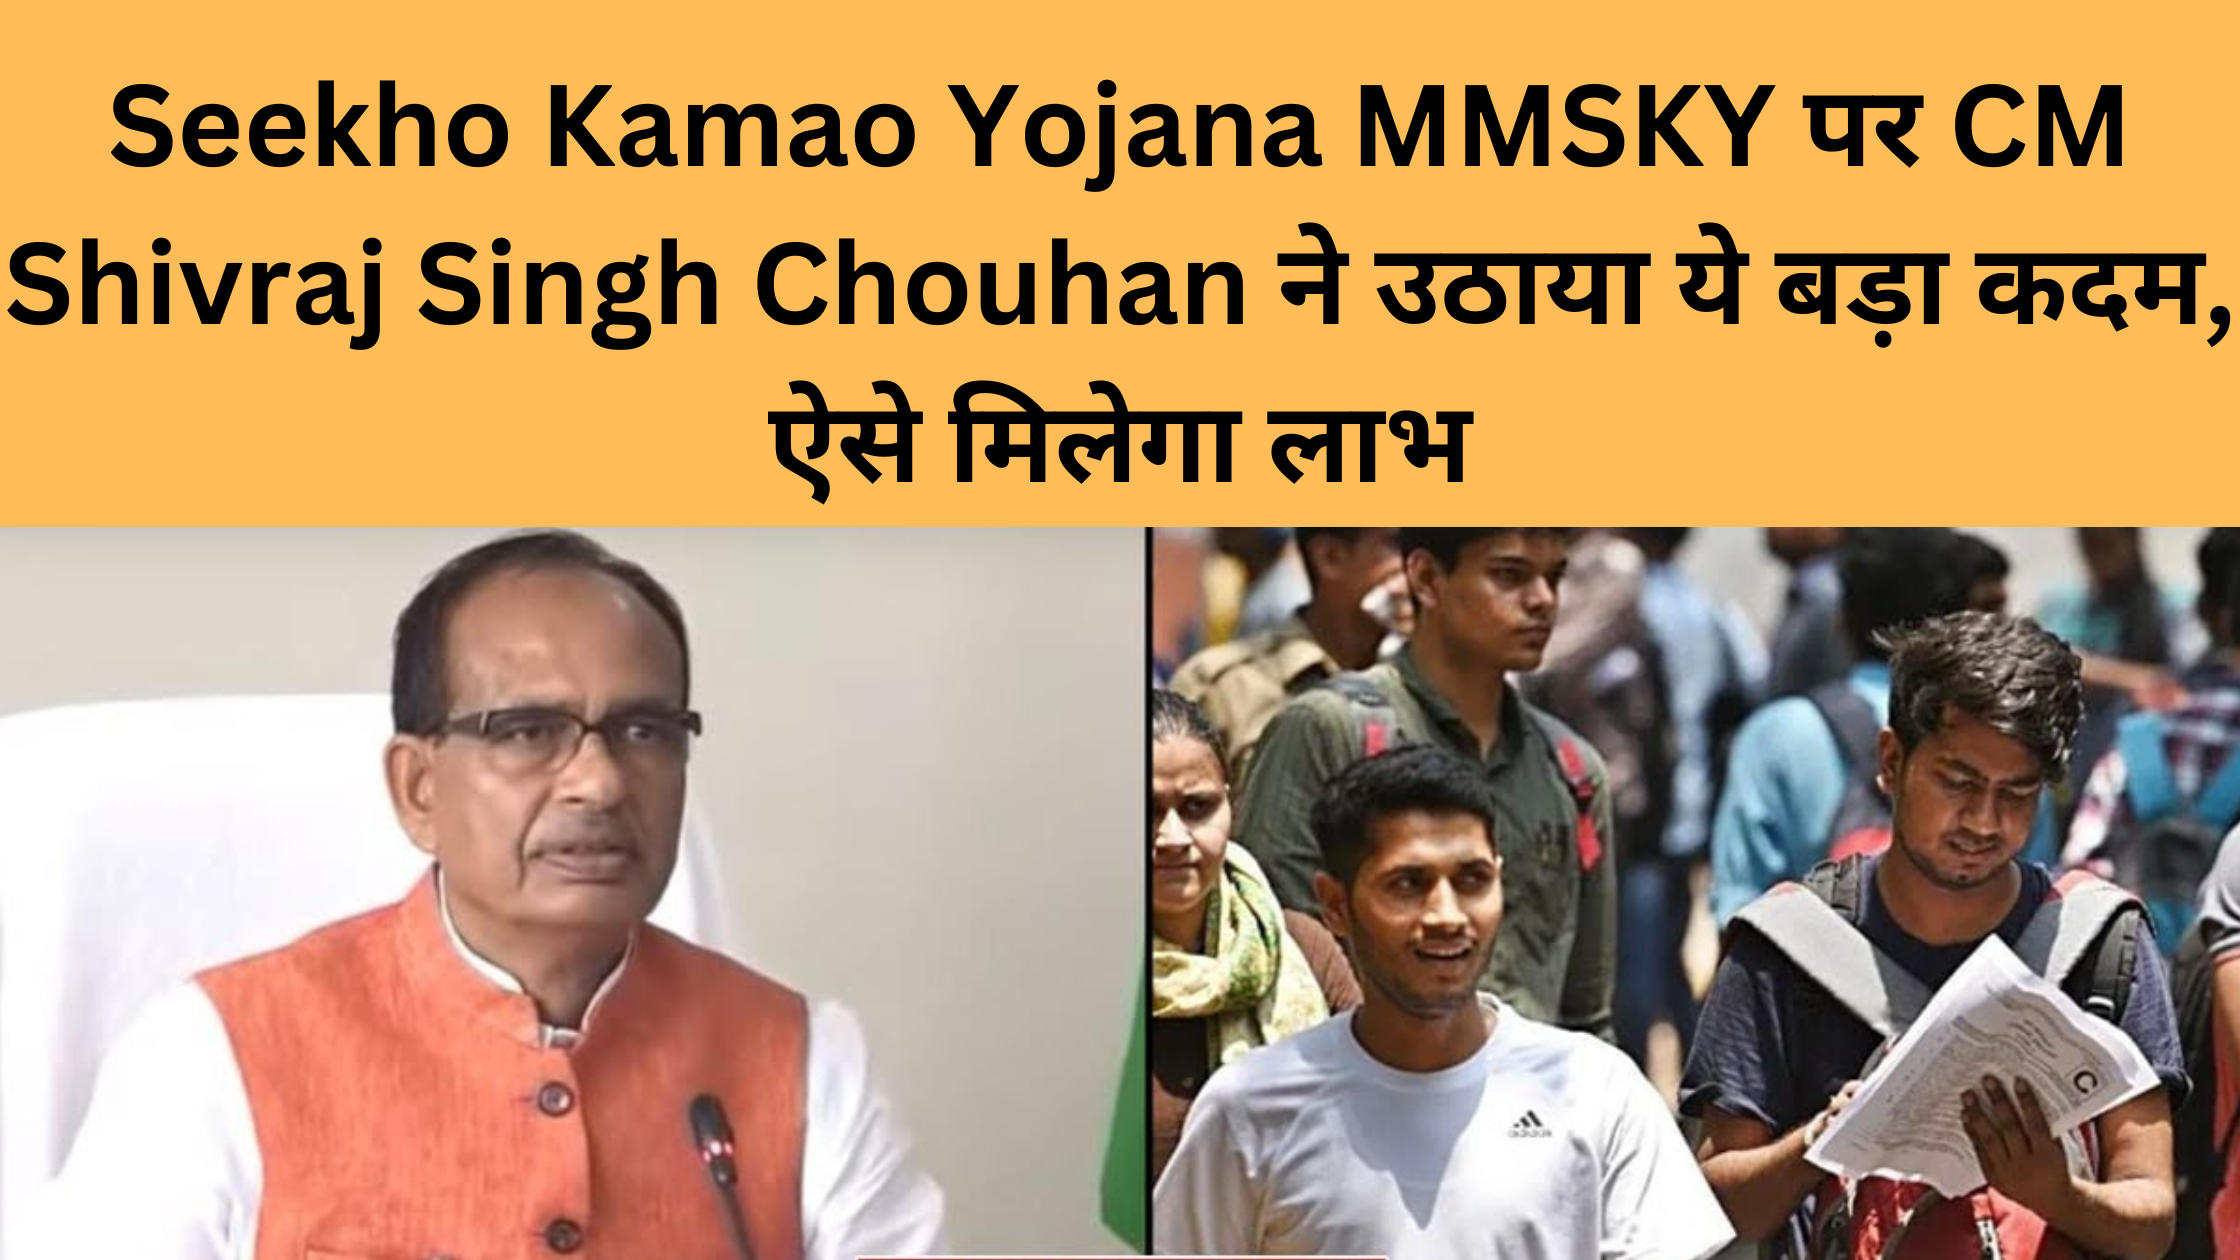 CM Shivraj Singh Chouhan took this big step on Seekho Kamao Yojana MMSKY, this is how you will get benefits.